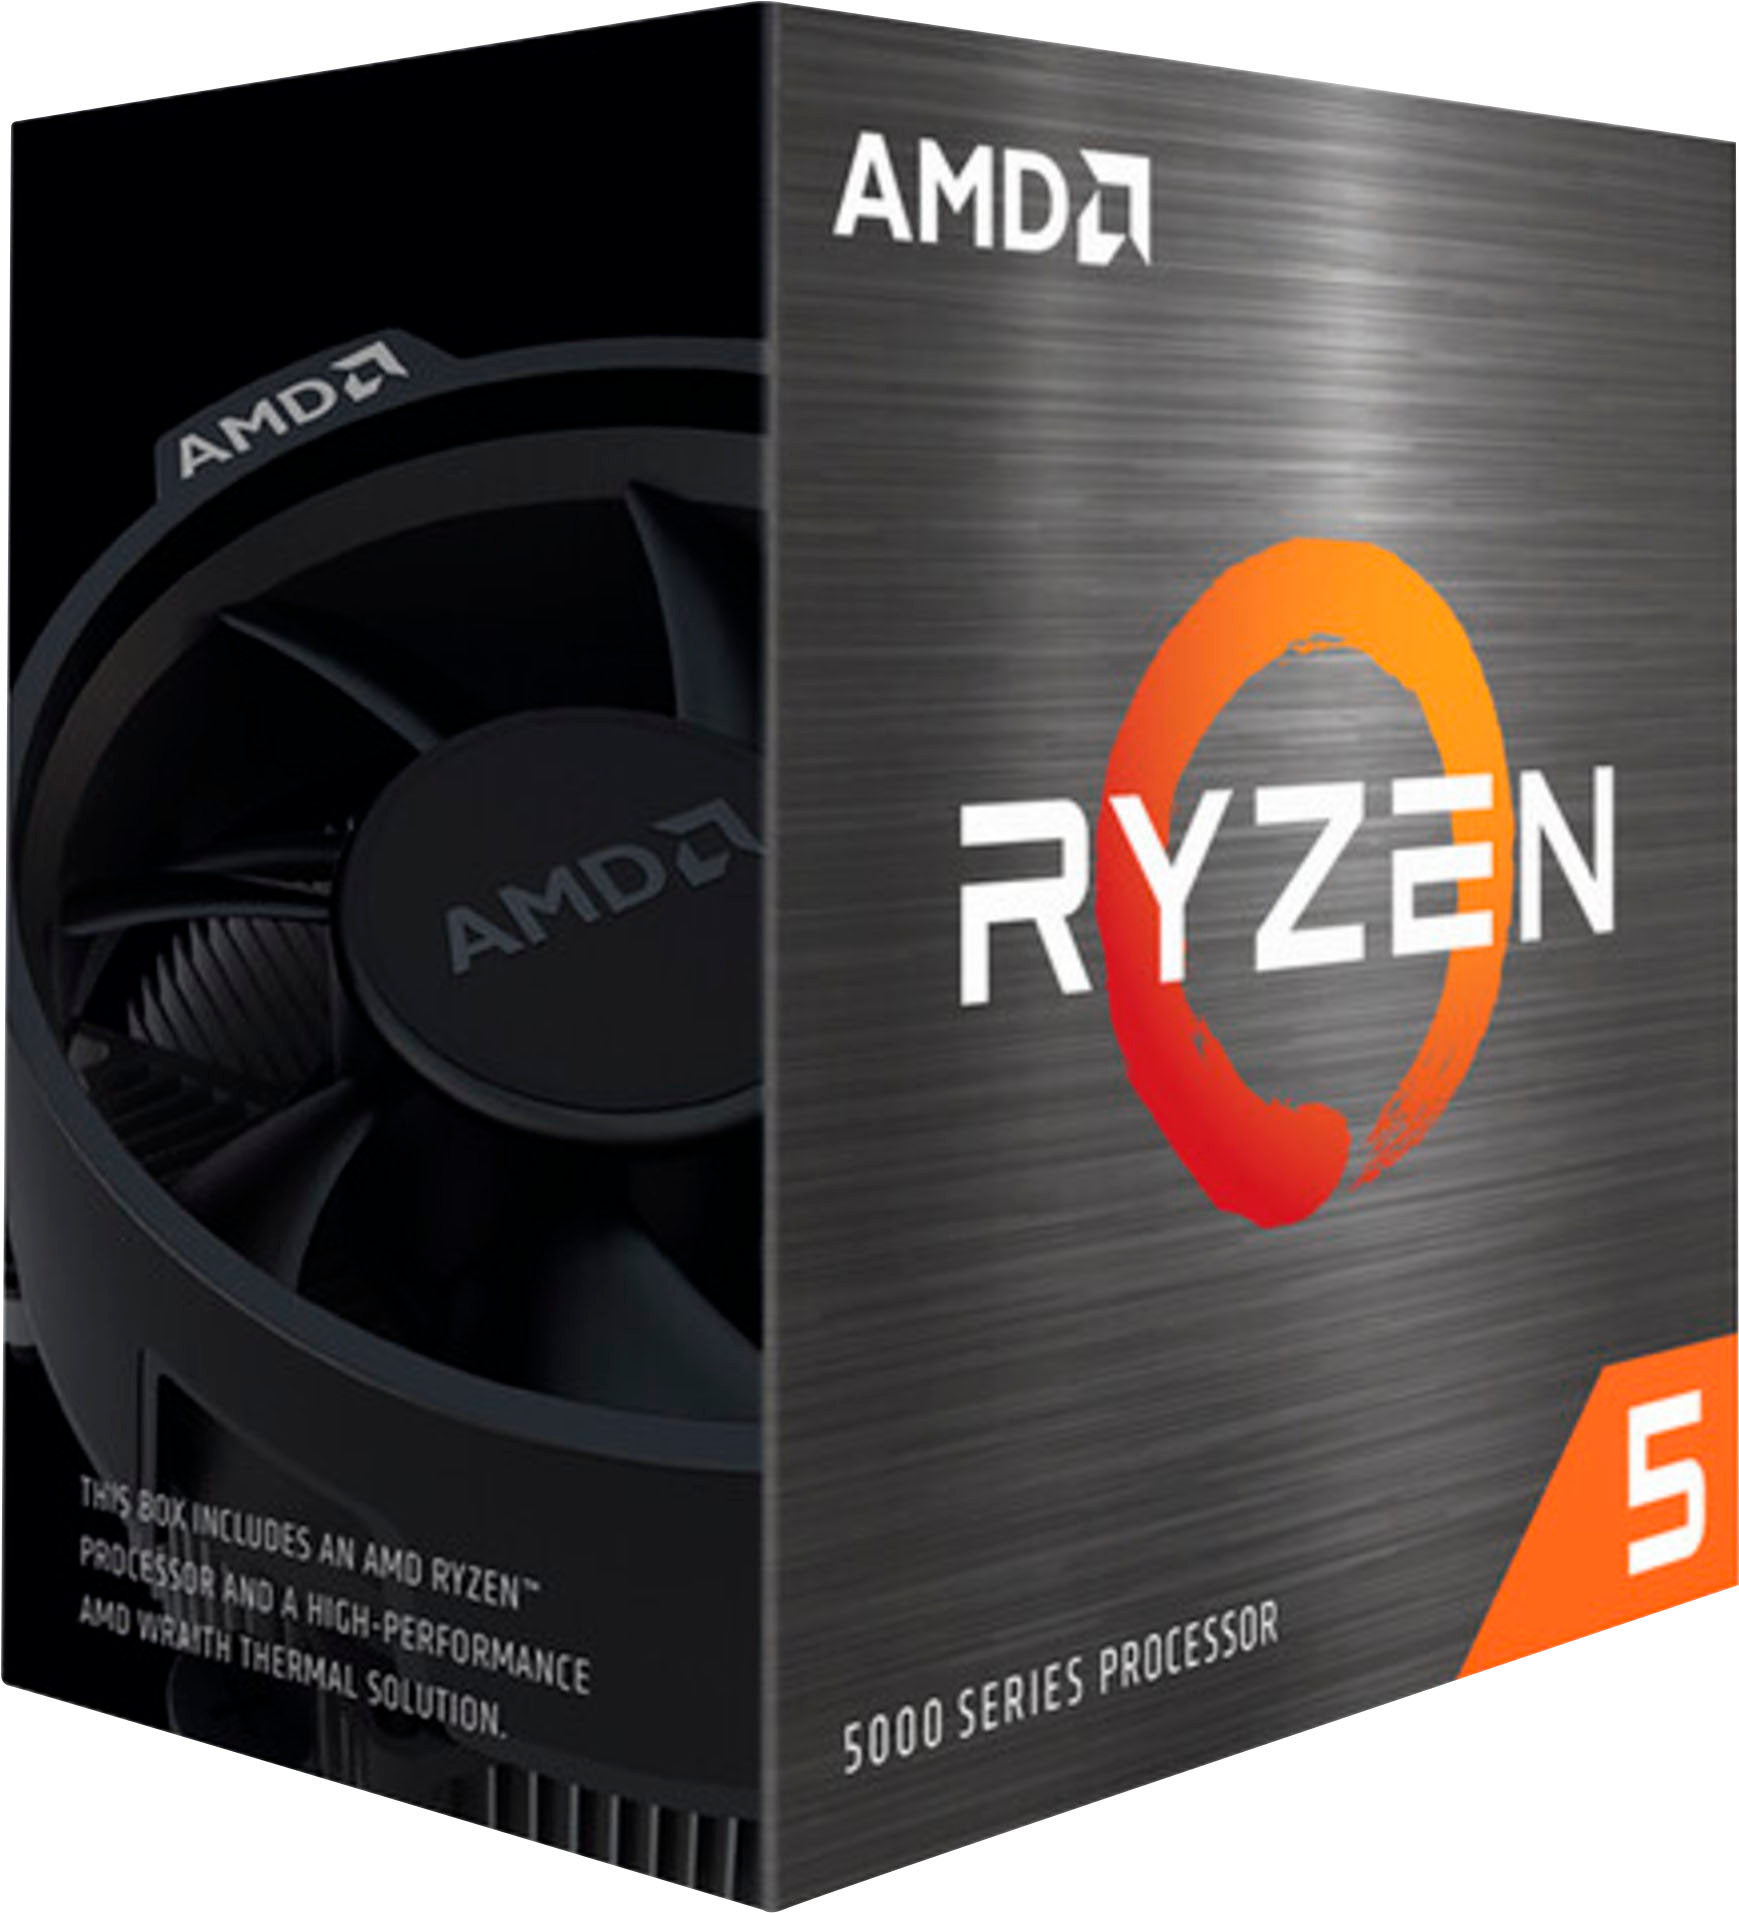 AMD Ryzen 5 5500 3.6 GHz Six-Core AM4 Processor Black 100